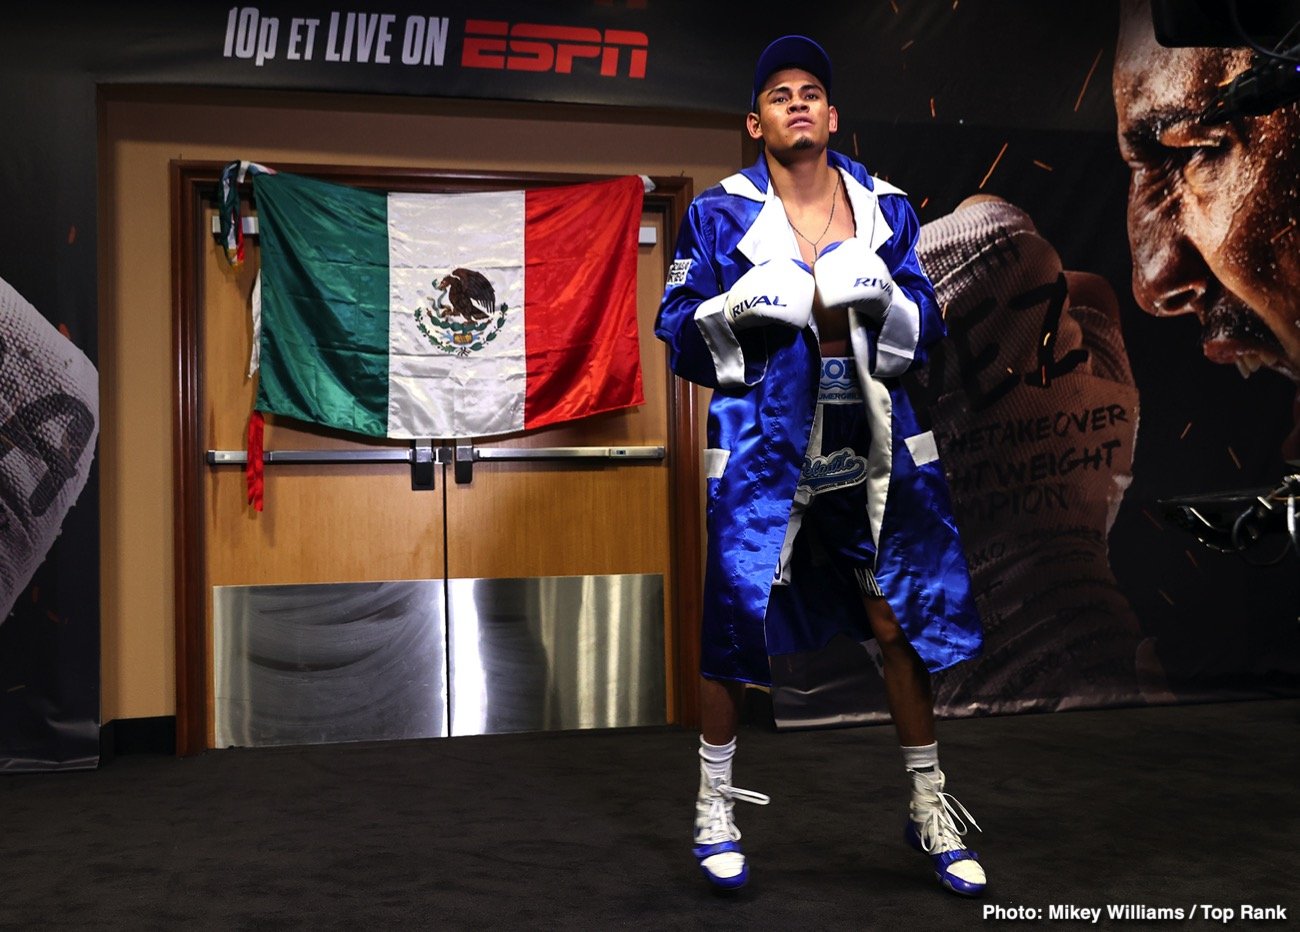 Image: Boxing Results: Emanuel Navarrete decisions Ruben Villa